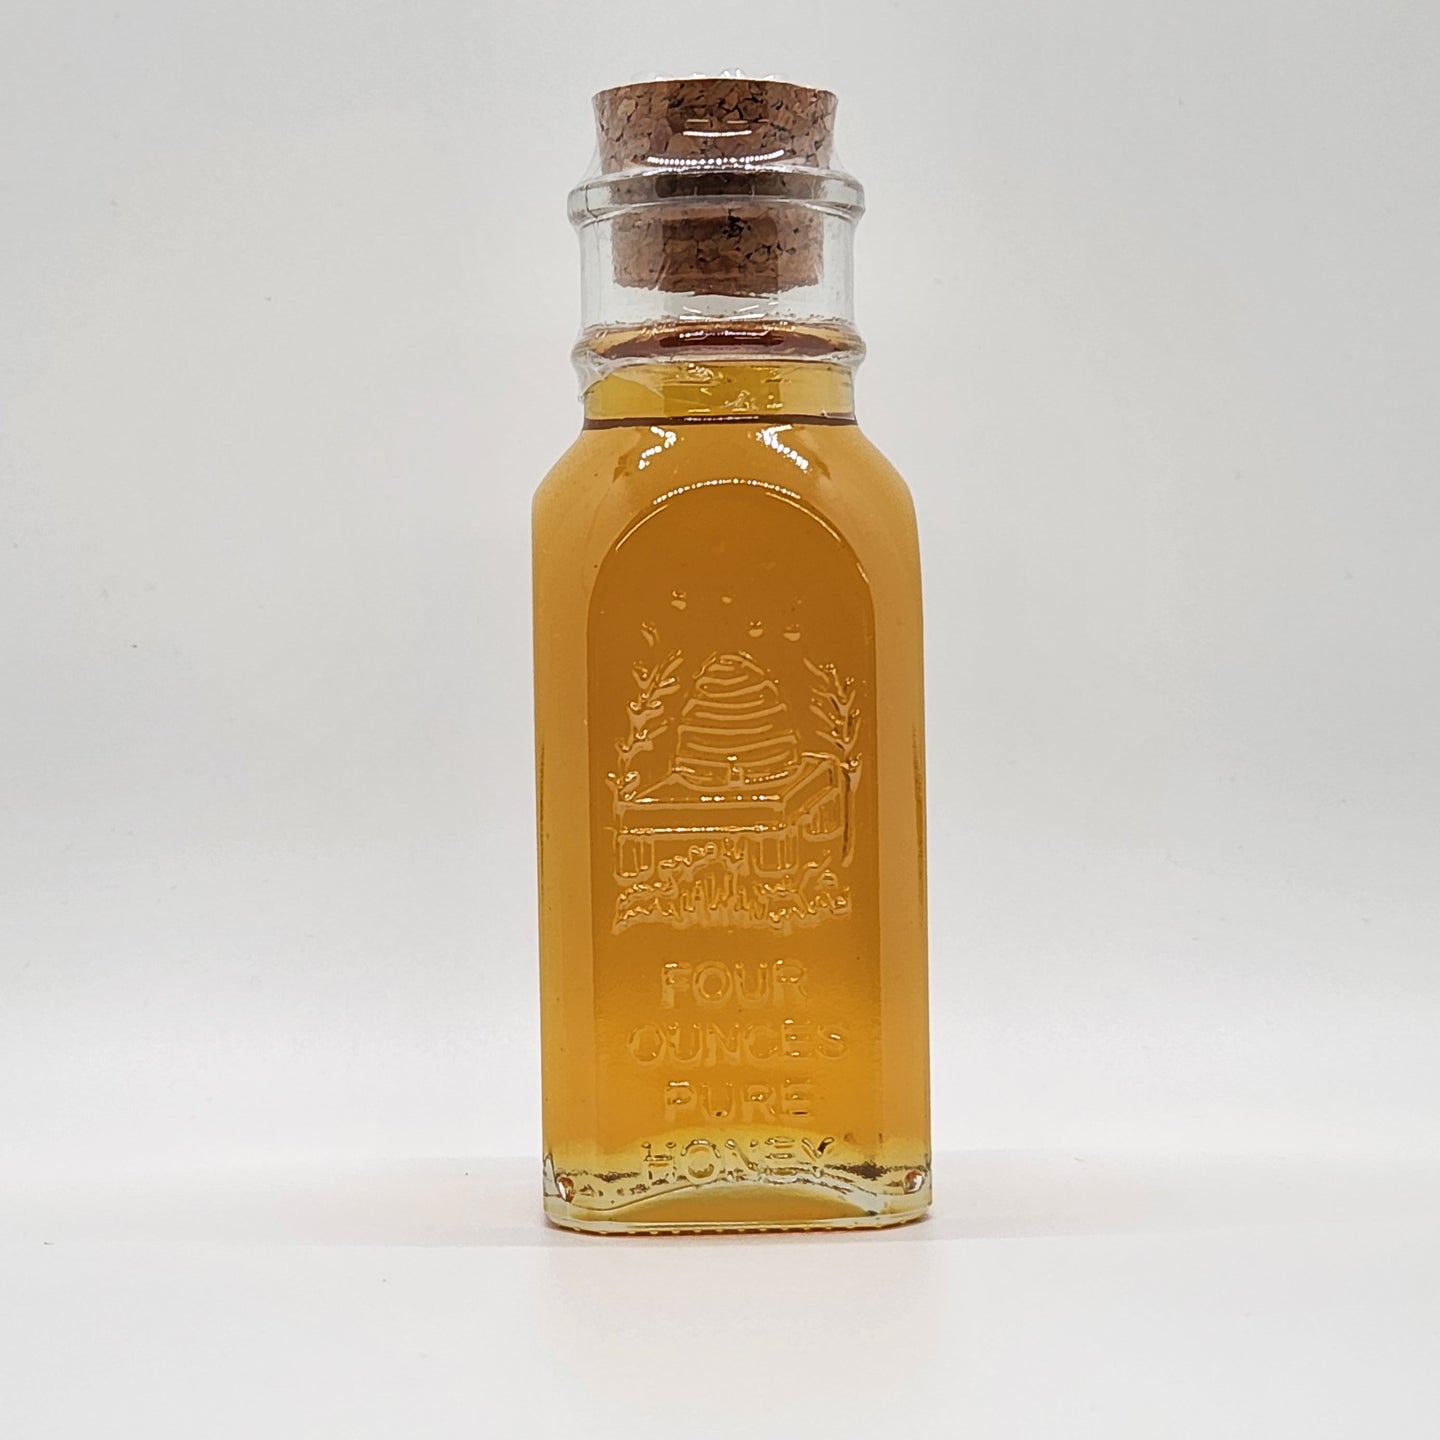 4 oz. Glass Muth Jar Ohio Valley Local Pure Raw Honey